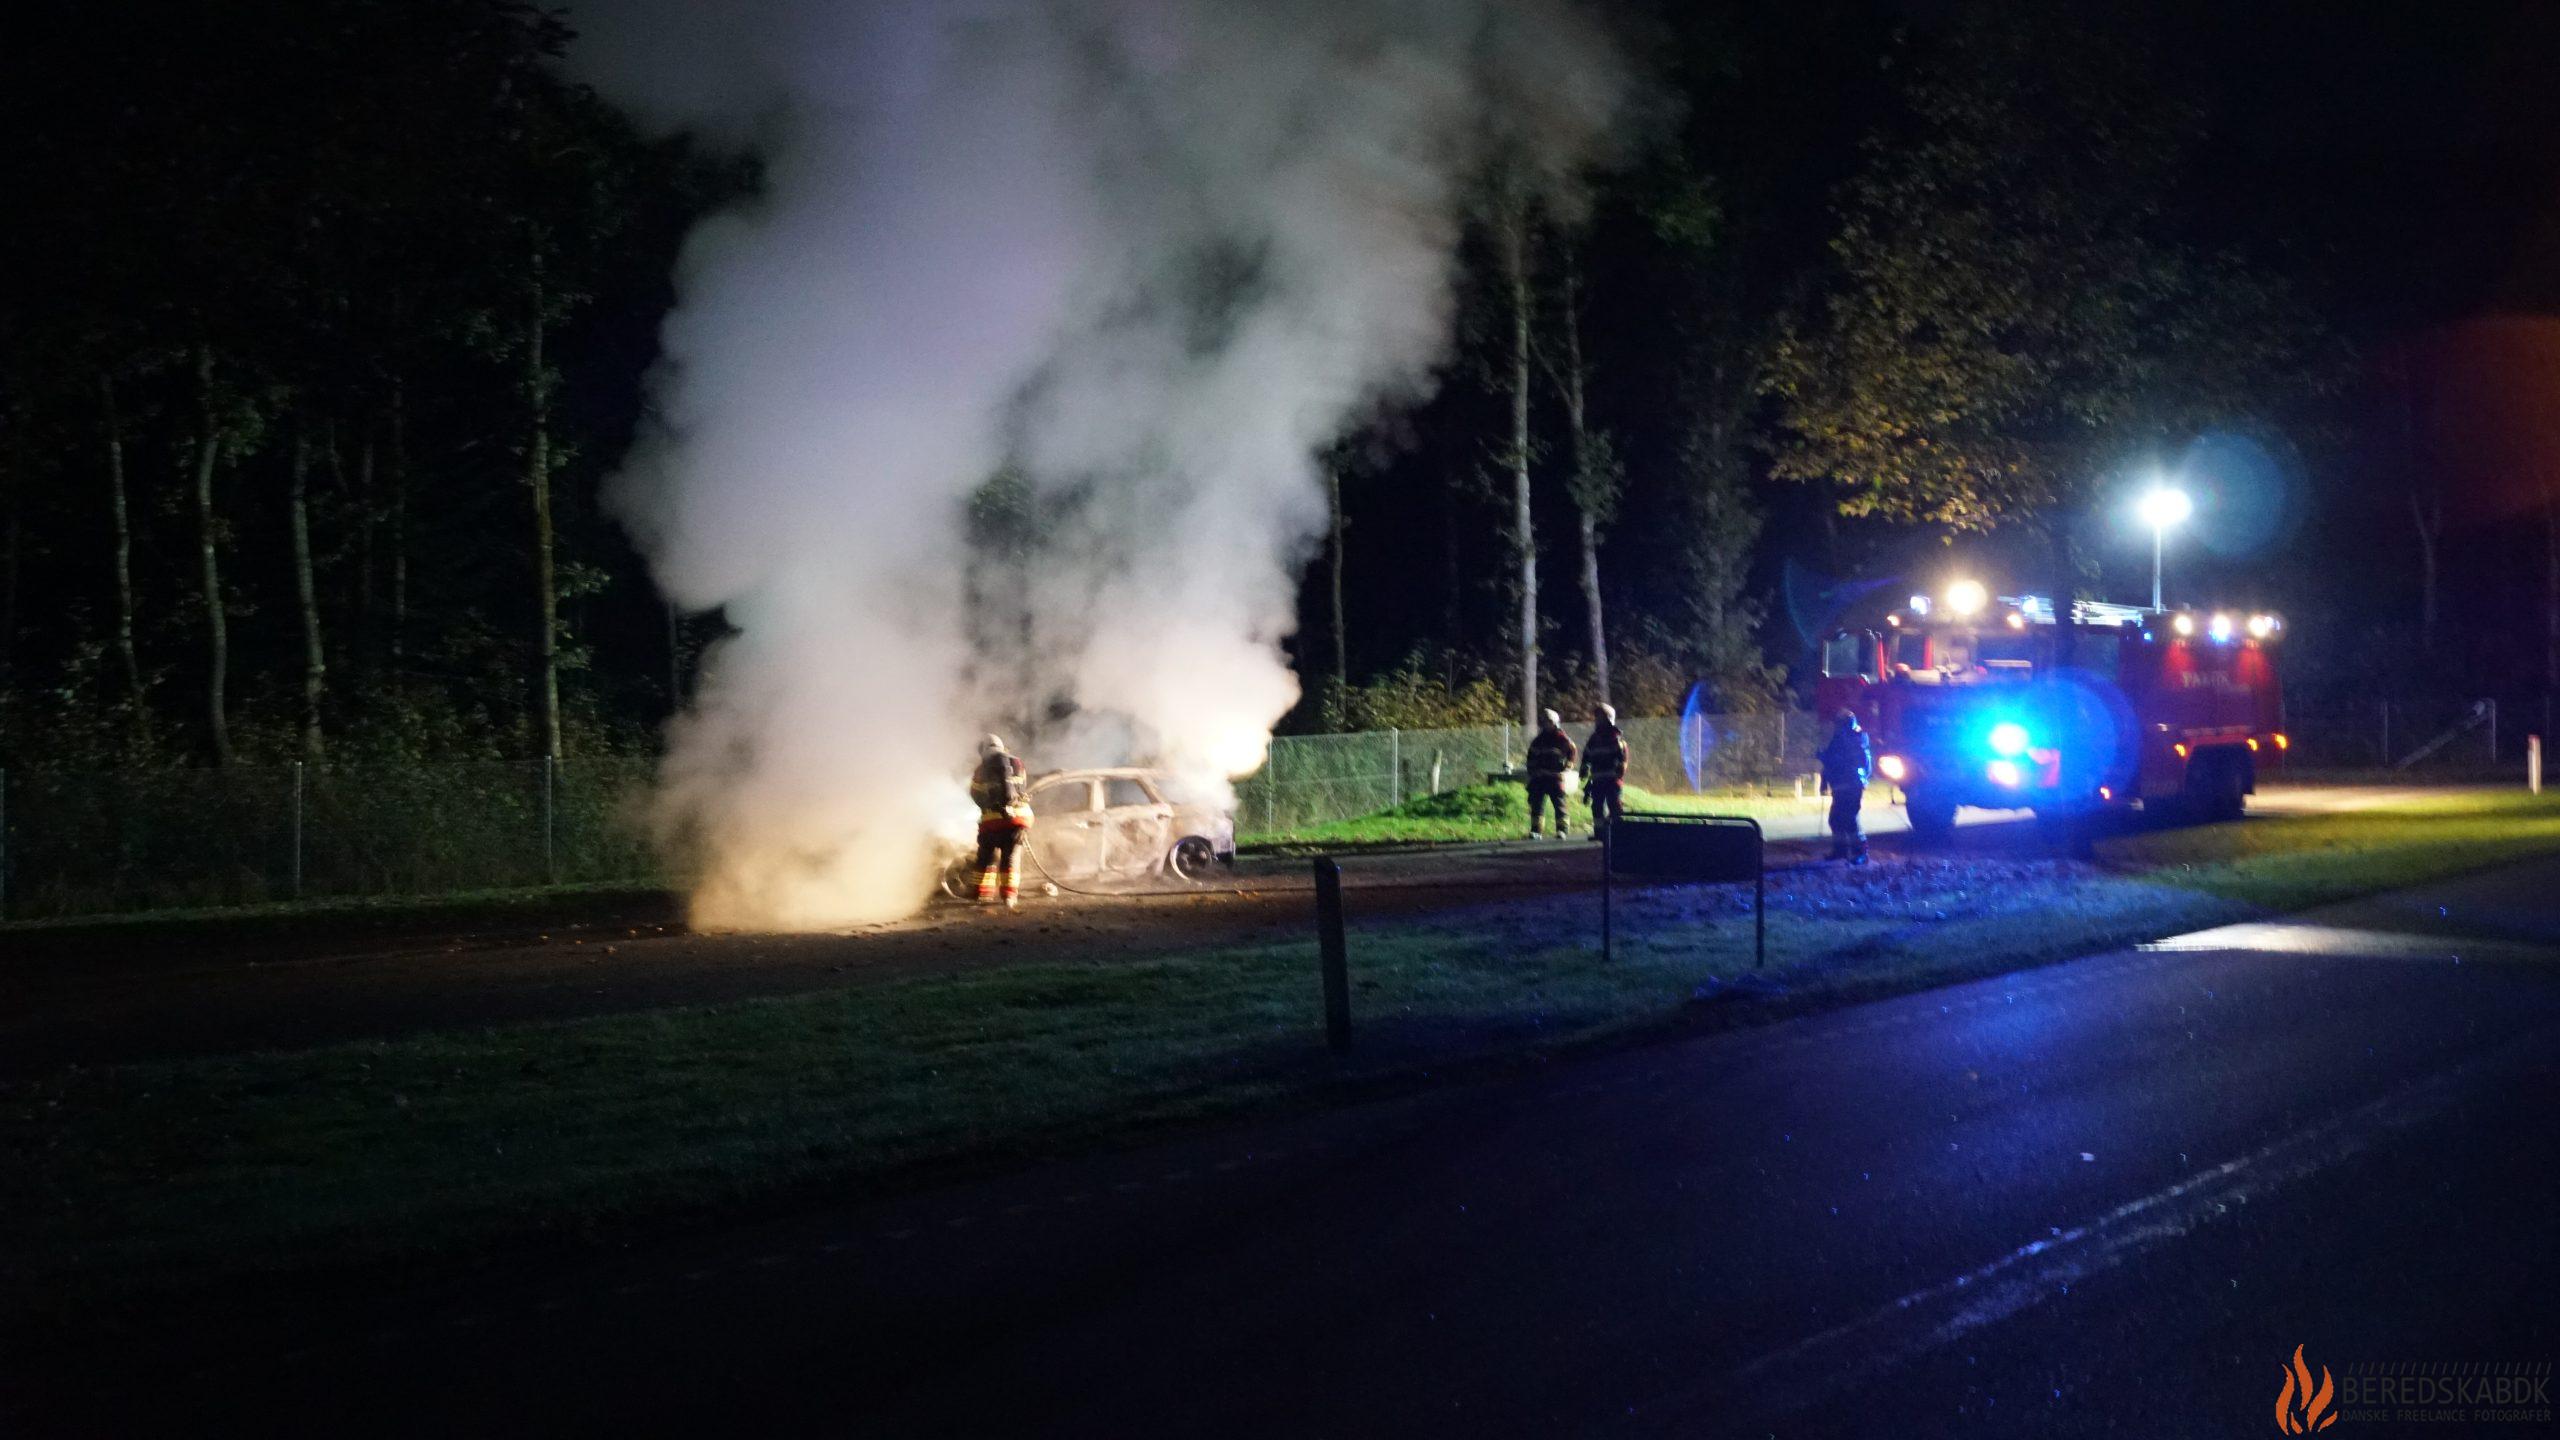 12/10-22 Brand i bil på rasteplads i Mattrup skov, Klovborg